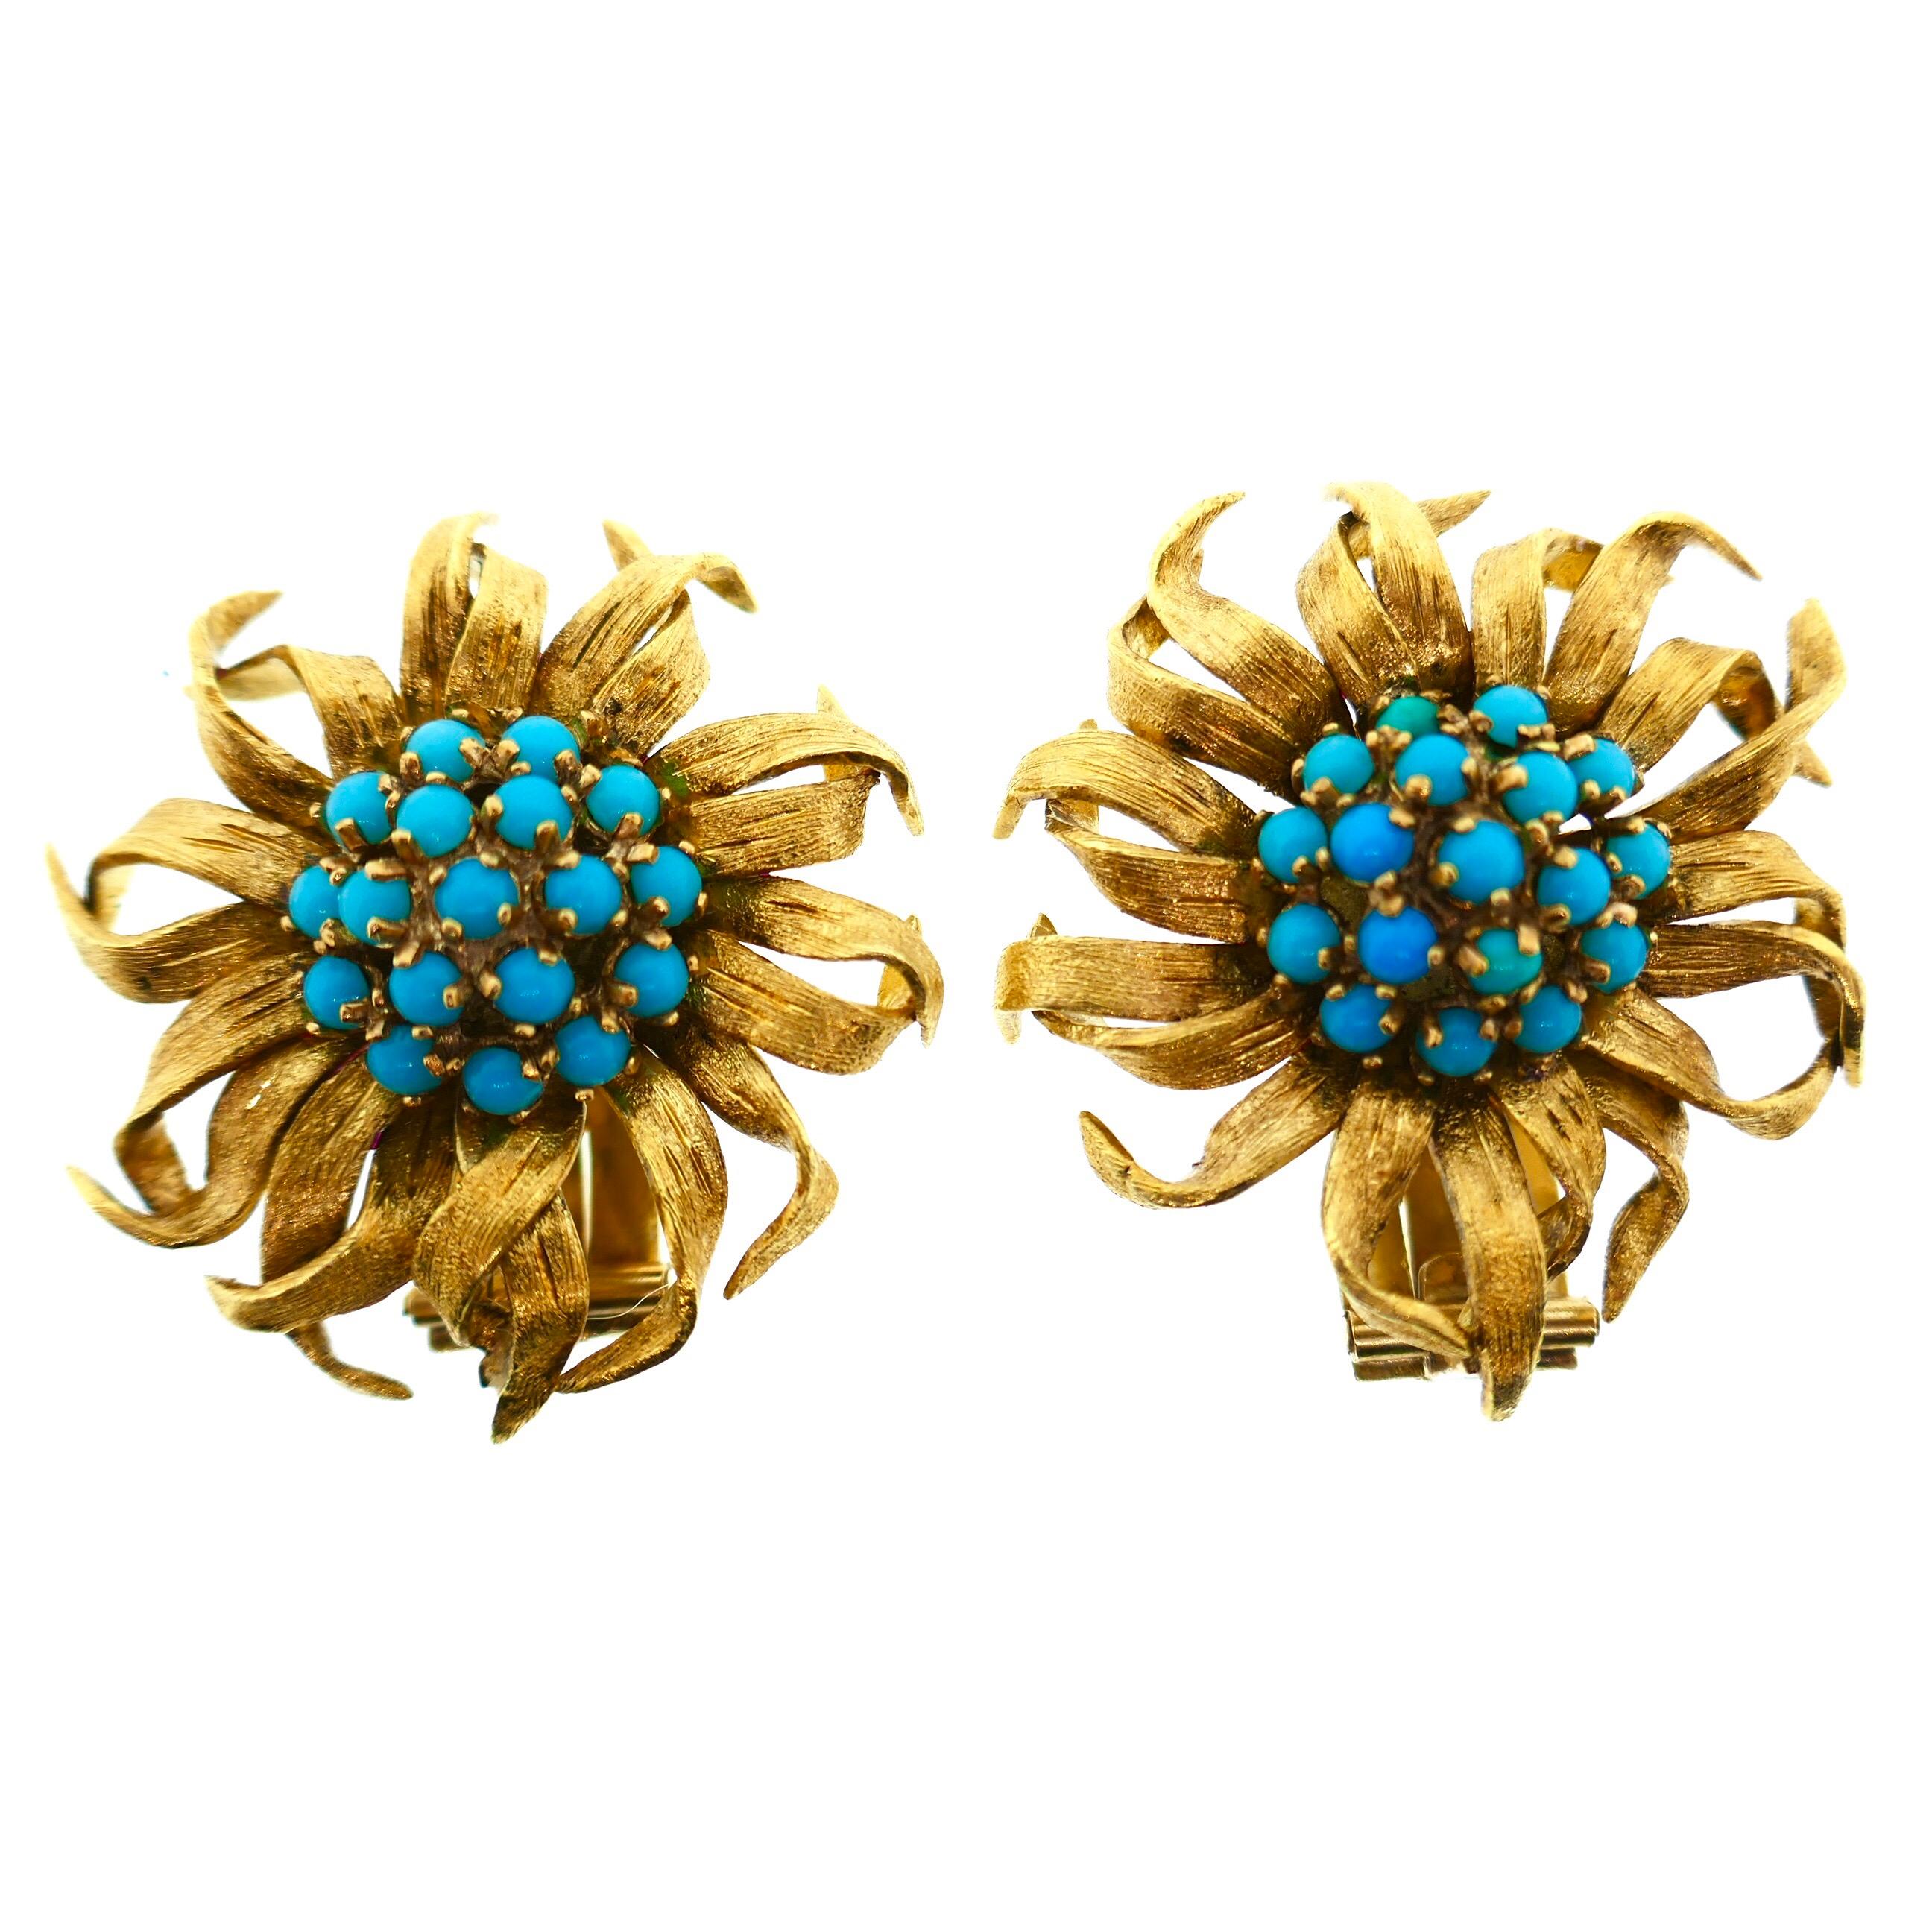 Cartier Paris 18 Karat Yellow Gold Turquoise Flower Brooch and Earrings Set 1